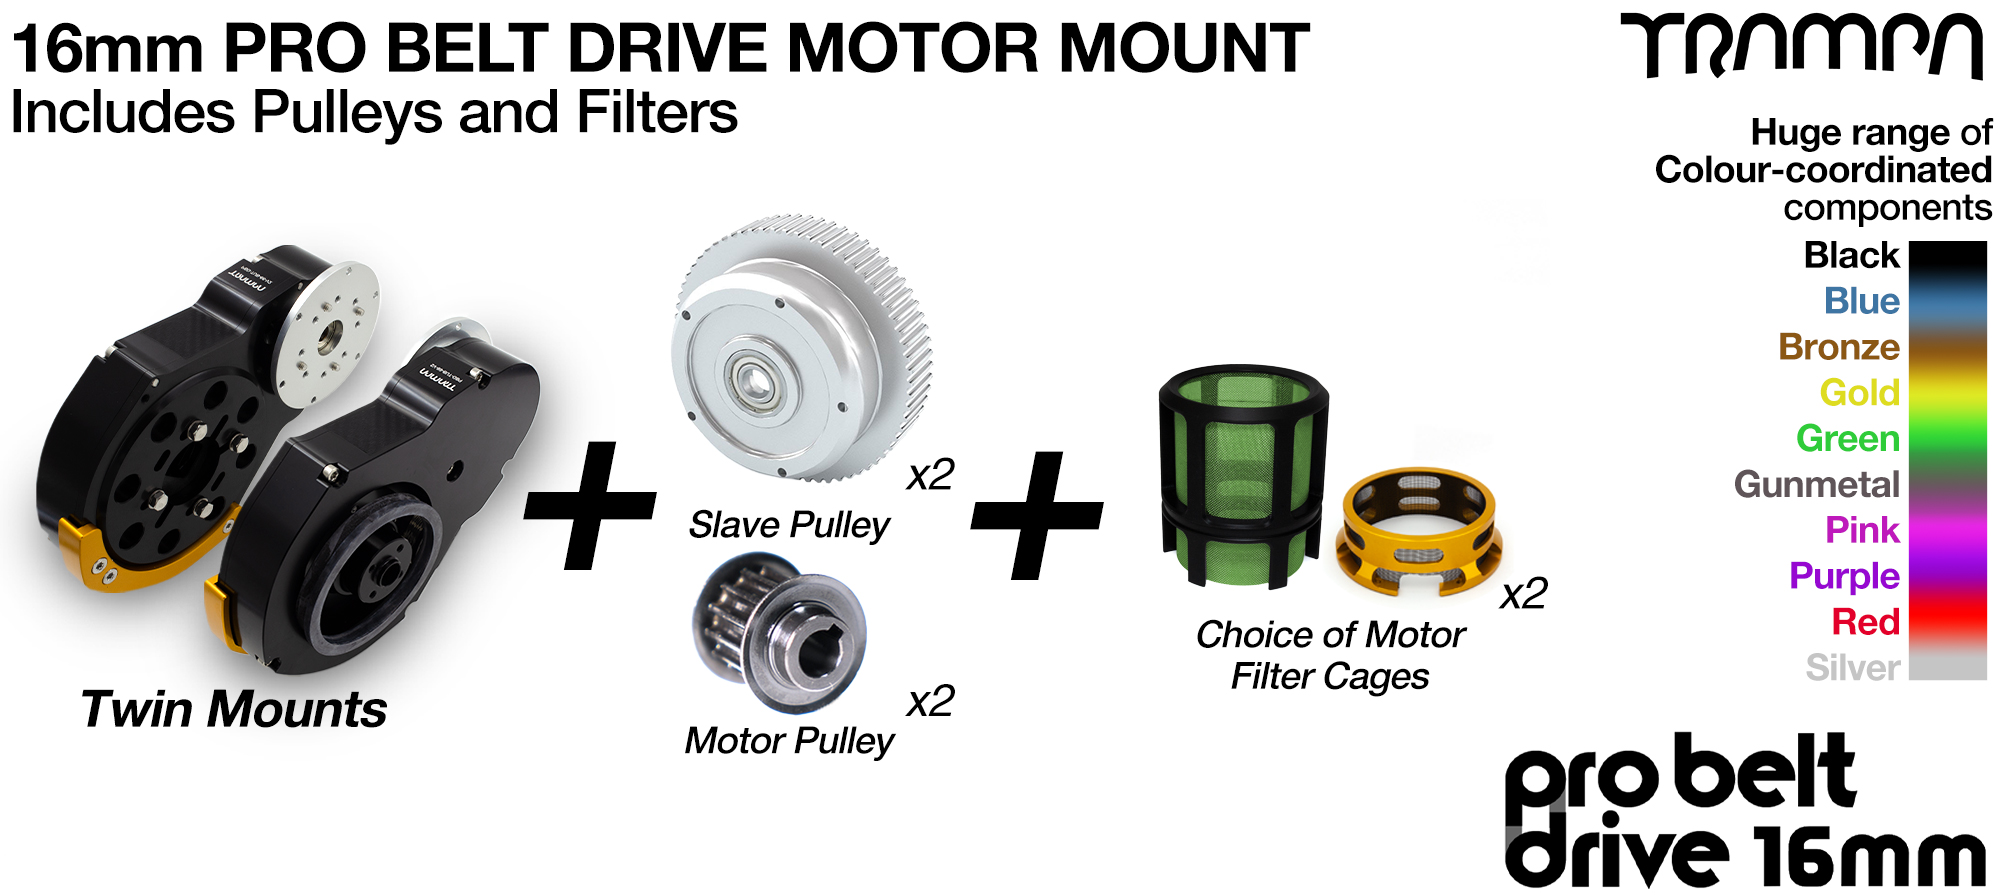 16mm PRO BELT DRIVE Motor Mounts with FILTERS & PULLEYS - NO Motors